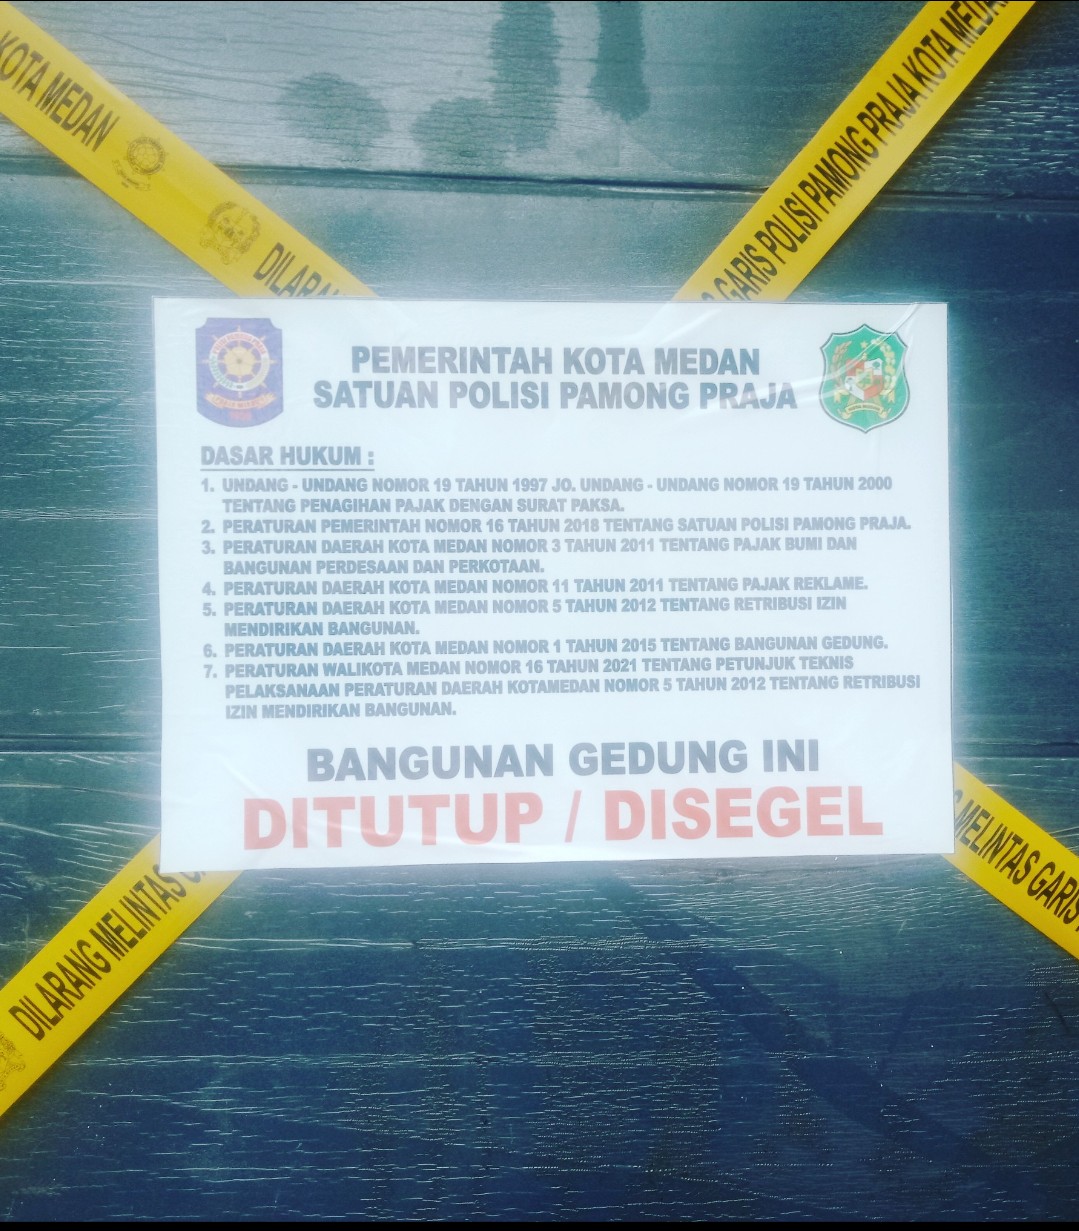 Warga Apresiasi Kasatpol PP Kota Medan Gercep Segel Gudang PT MMI Jl.Mandor Kecamatan Medan Timur